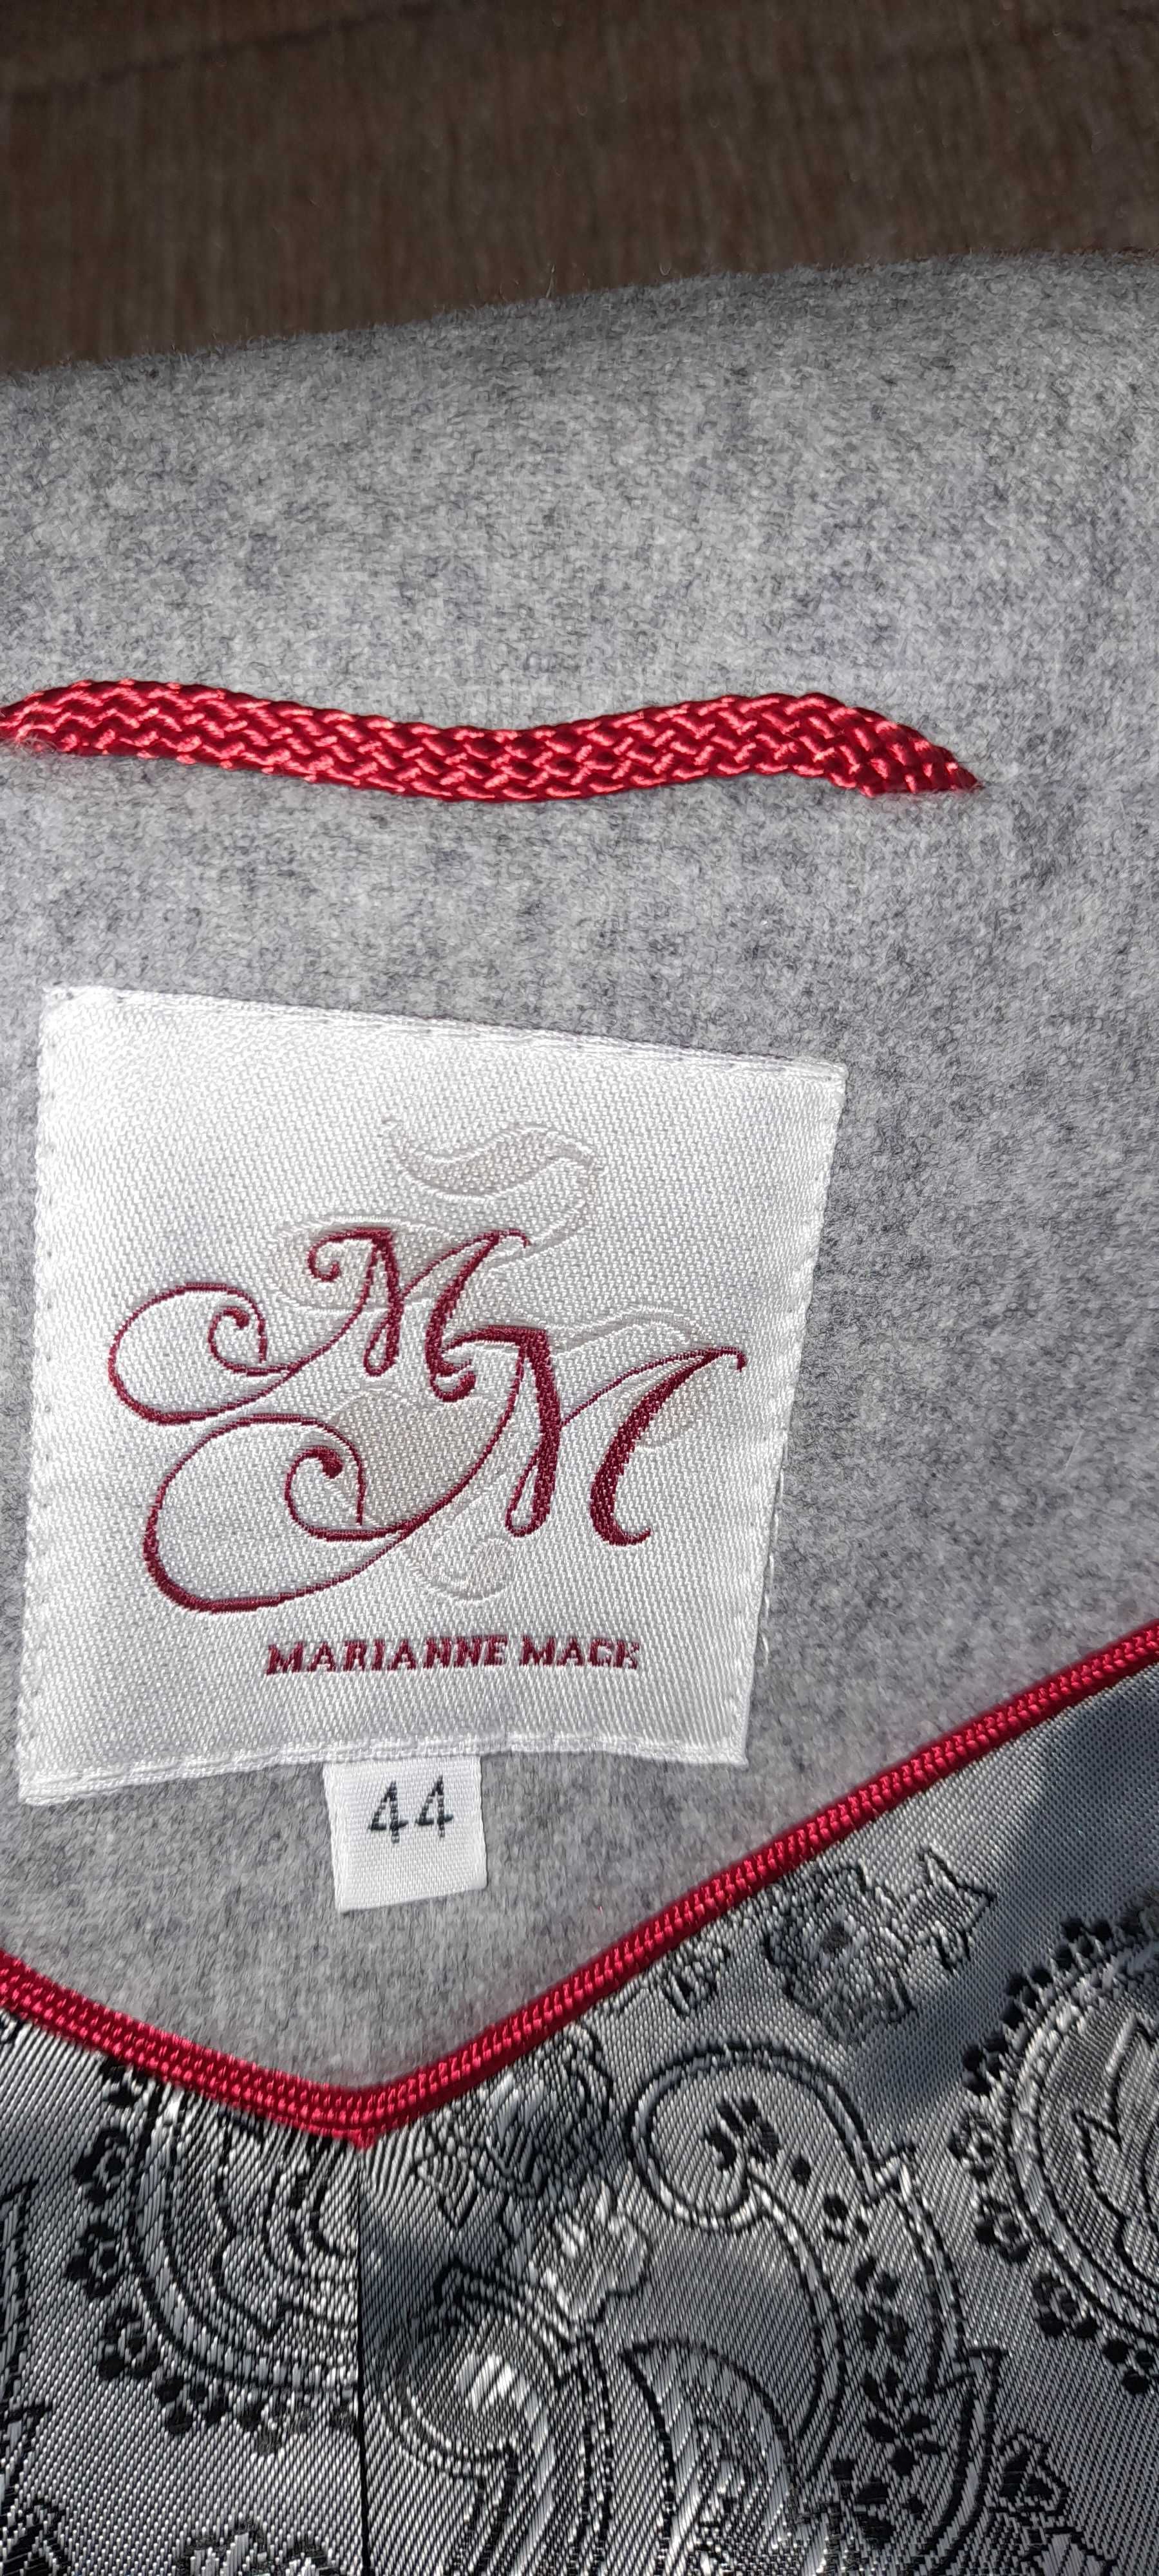 żakiet Marianne Mack r. 44